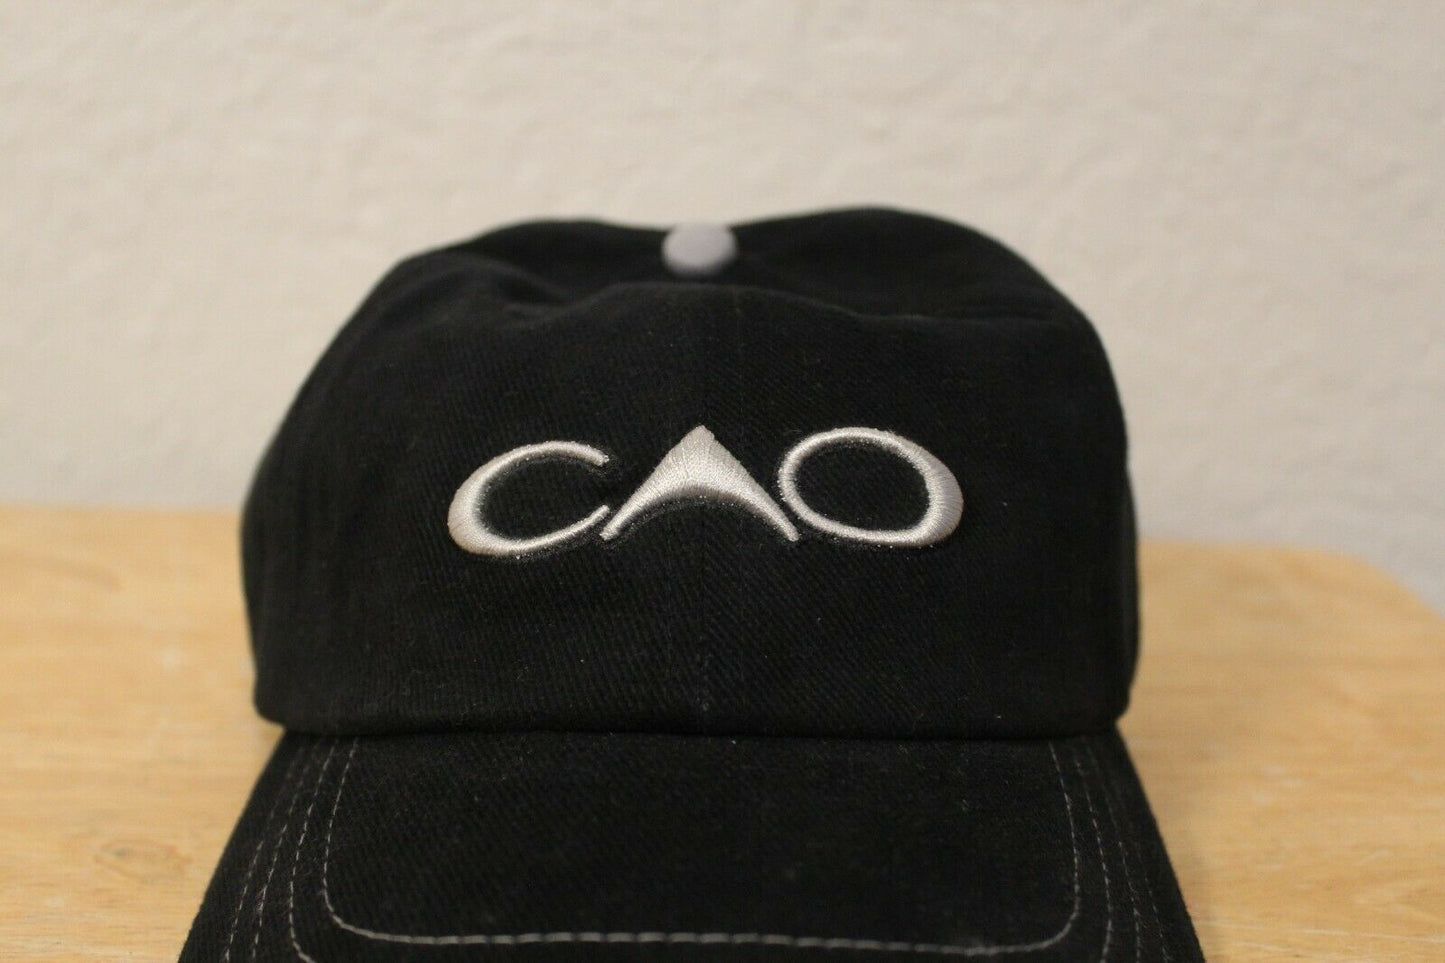 CAO Baseball Cap